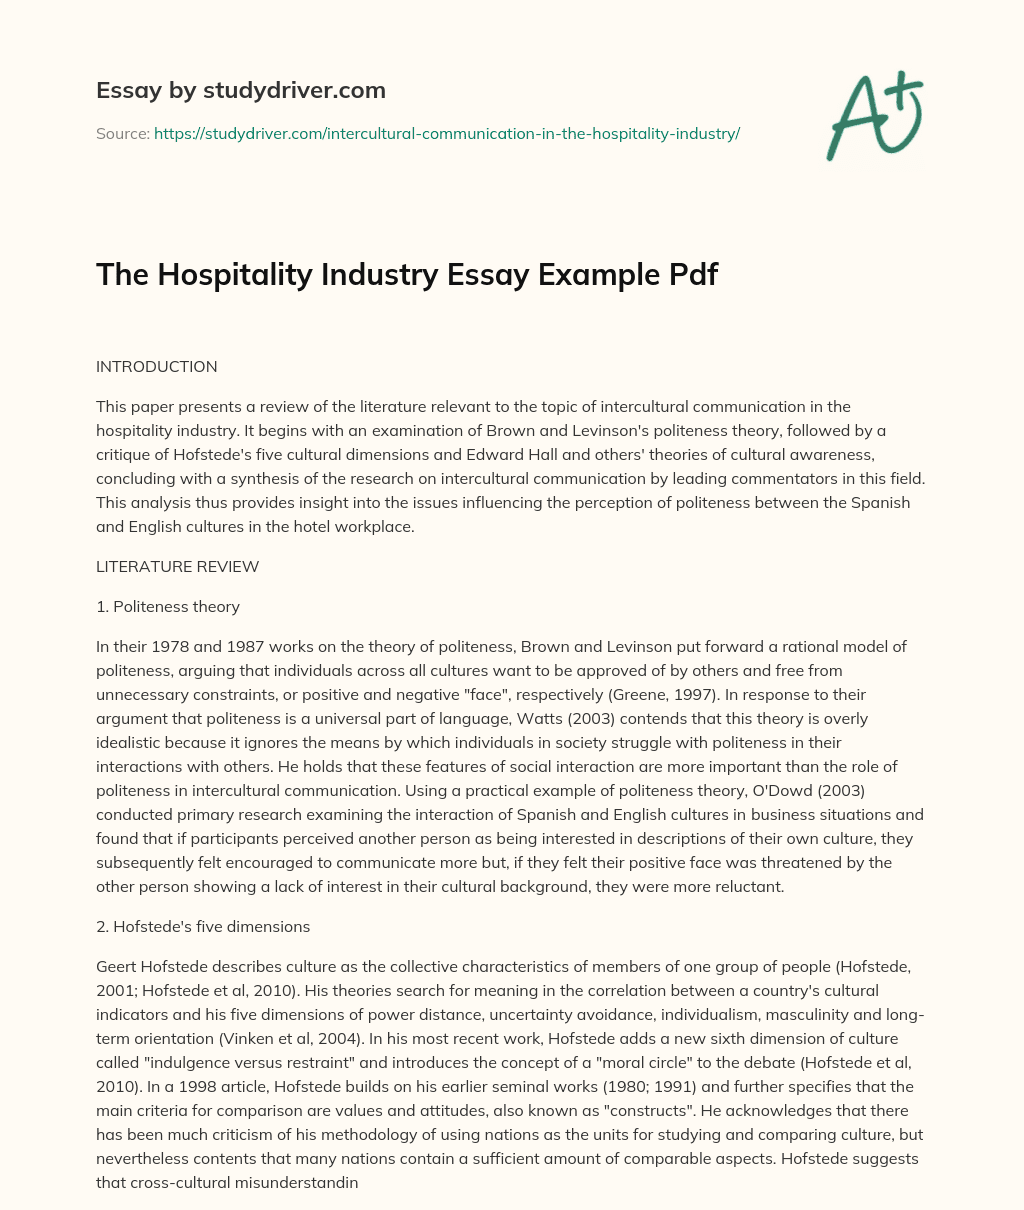 The Hospitality Industry Essay Example Pdf essay